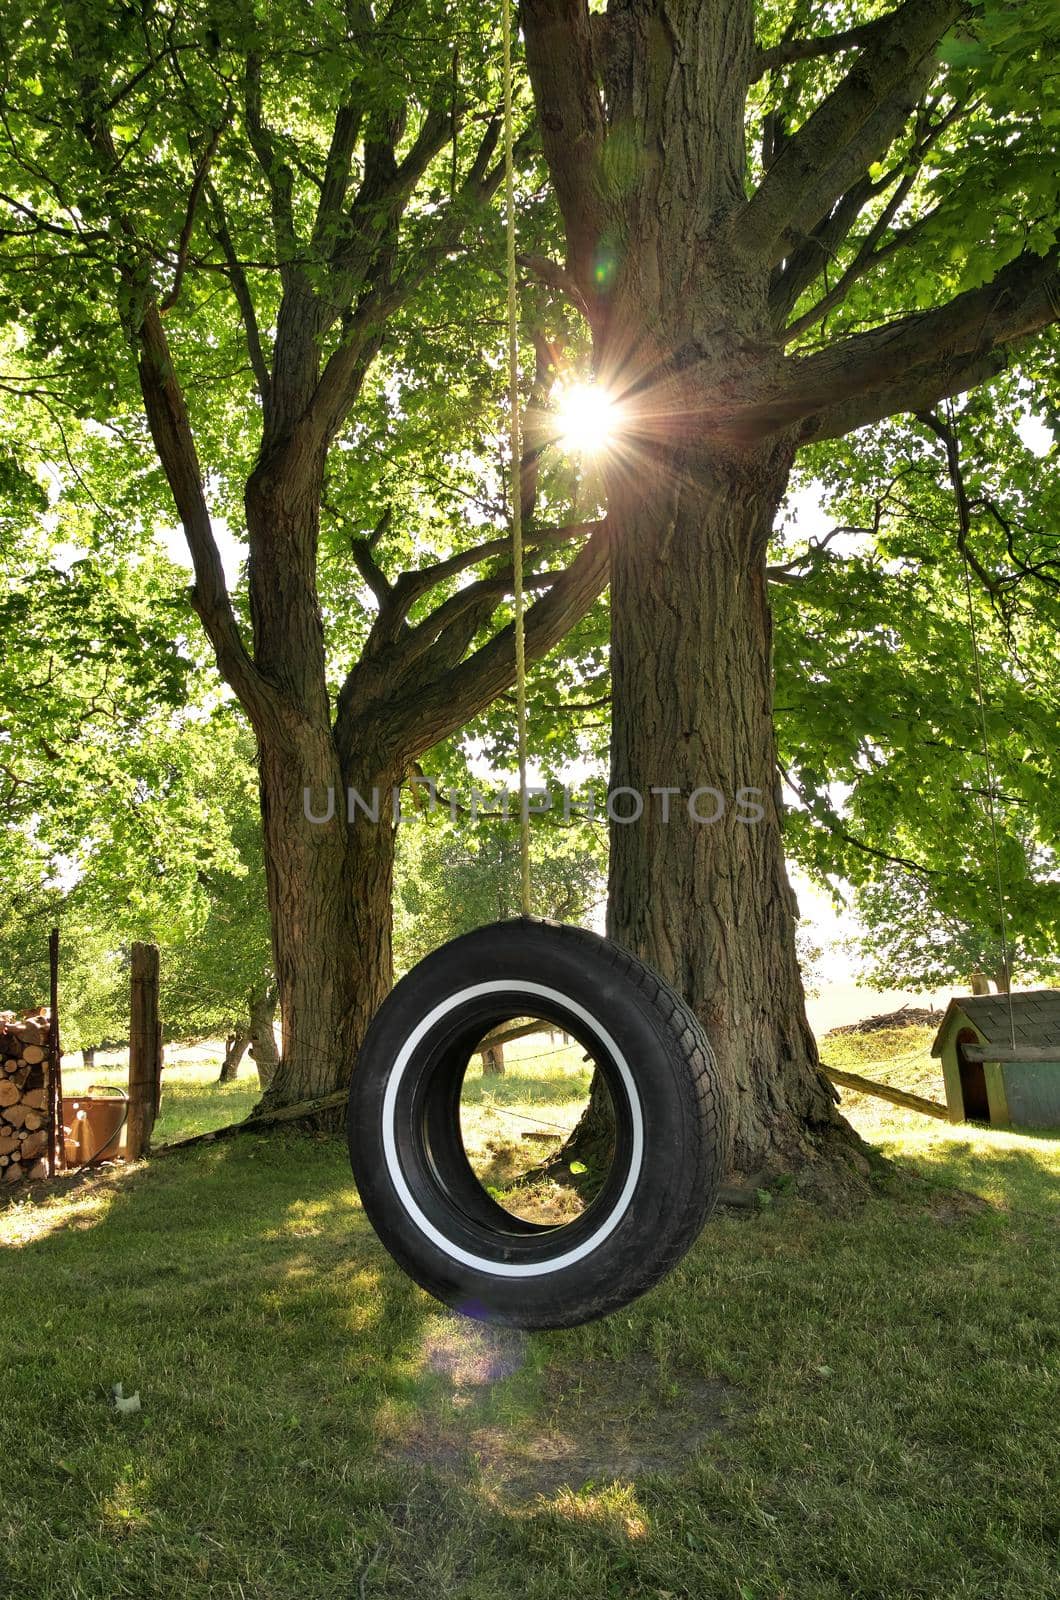 Tire Swing Underneath Maple Tree on Farm in Summer by markvandam